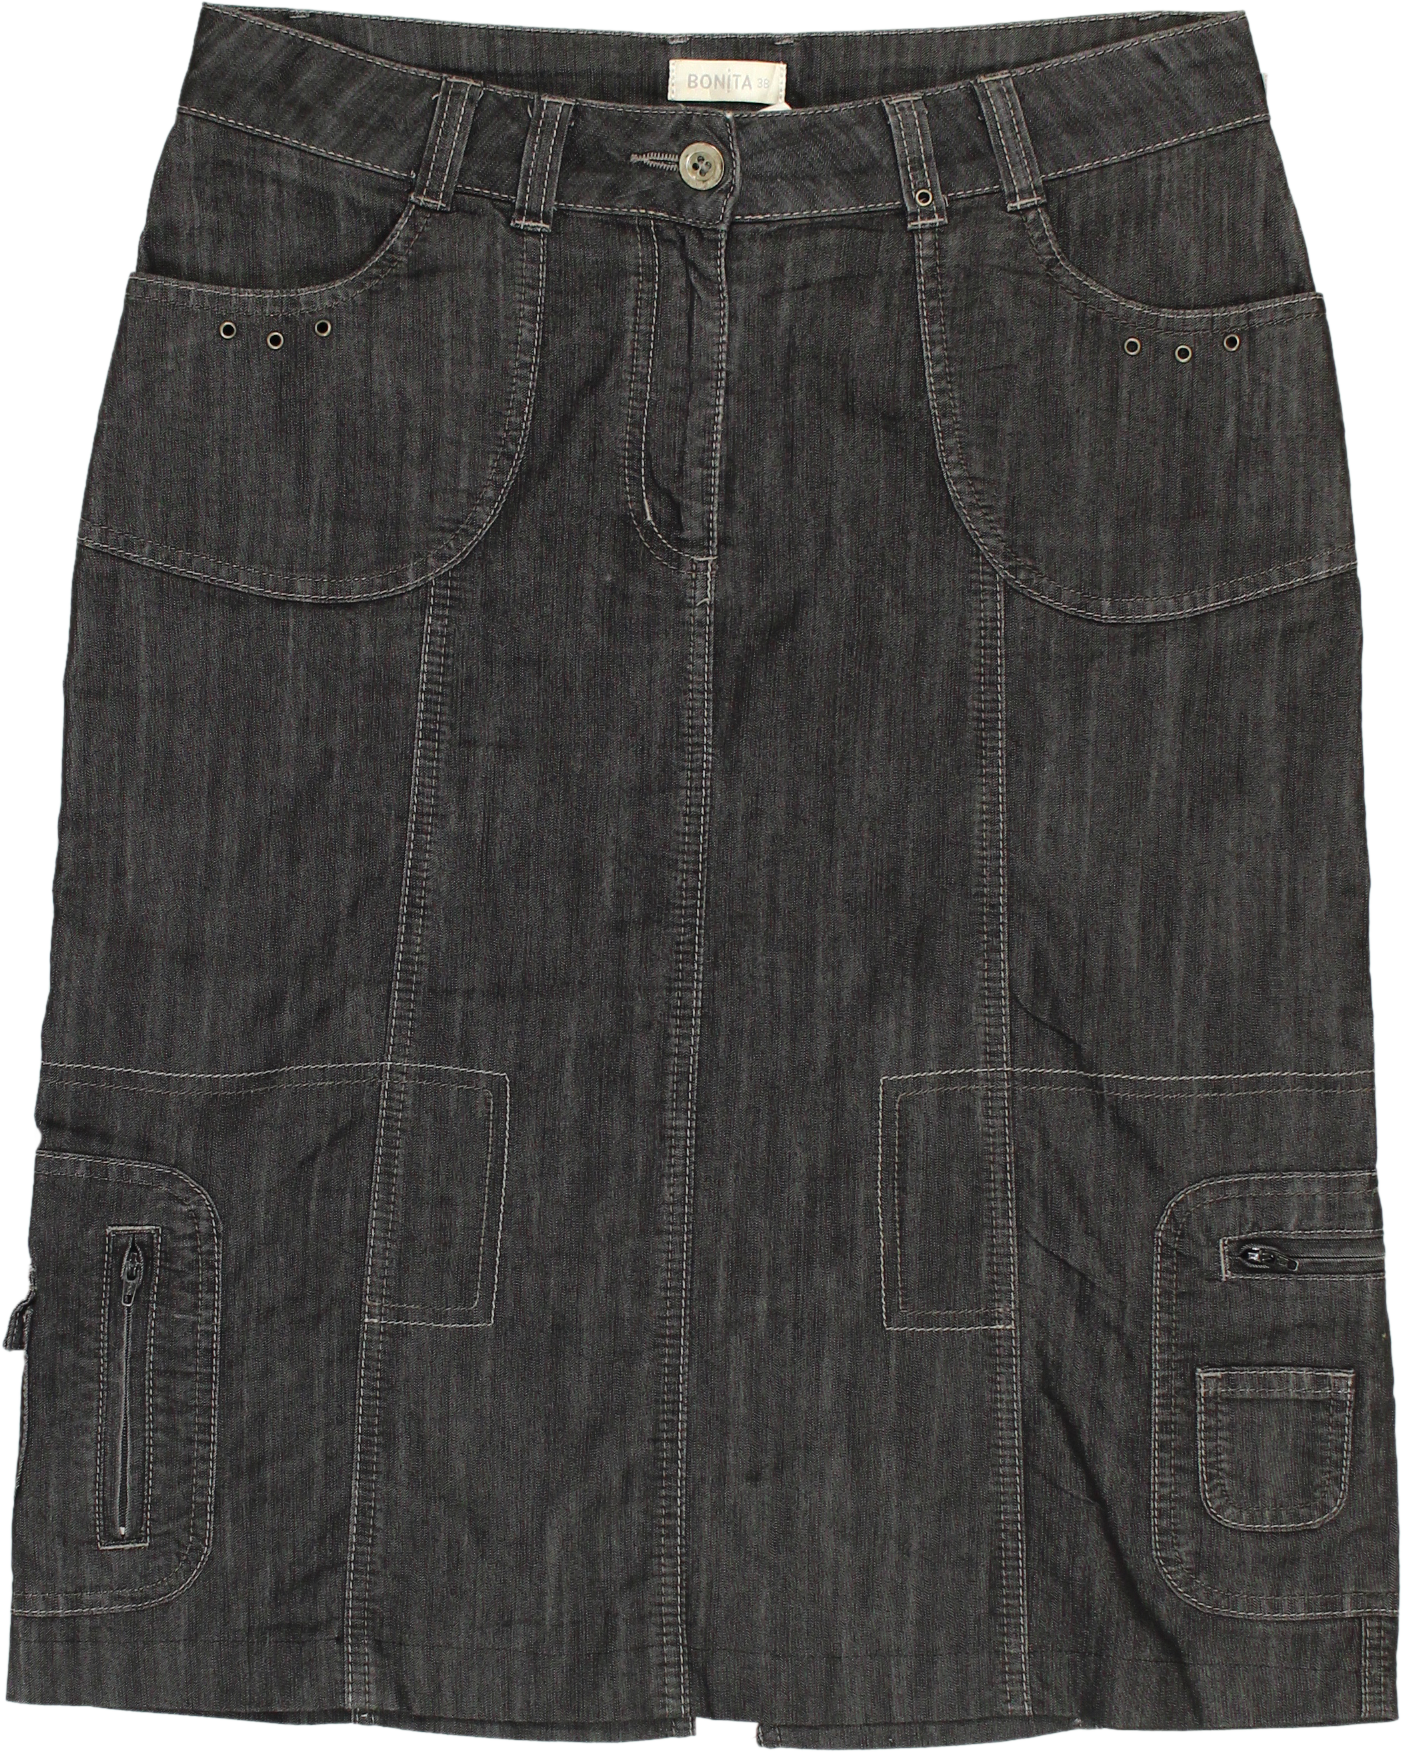 Bonita - Denim Skirt- ThriftTale.com - Vintage and second handclothing